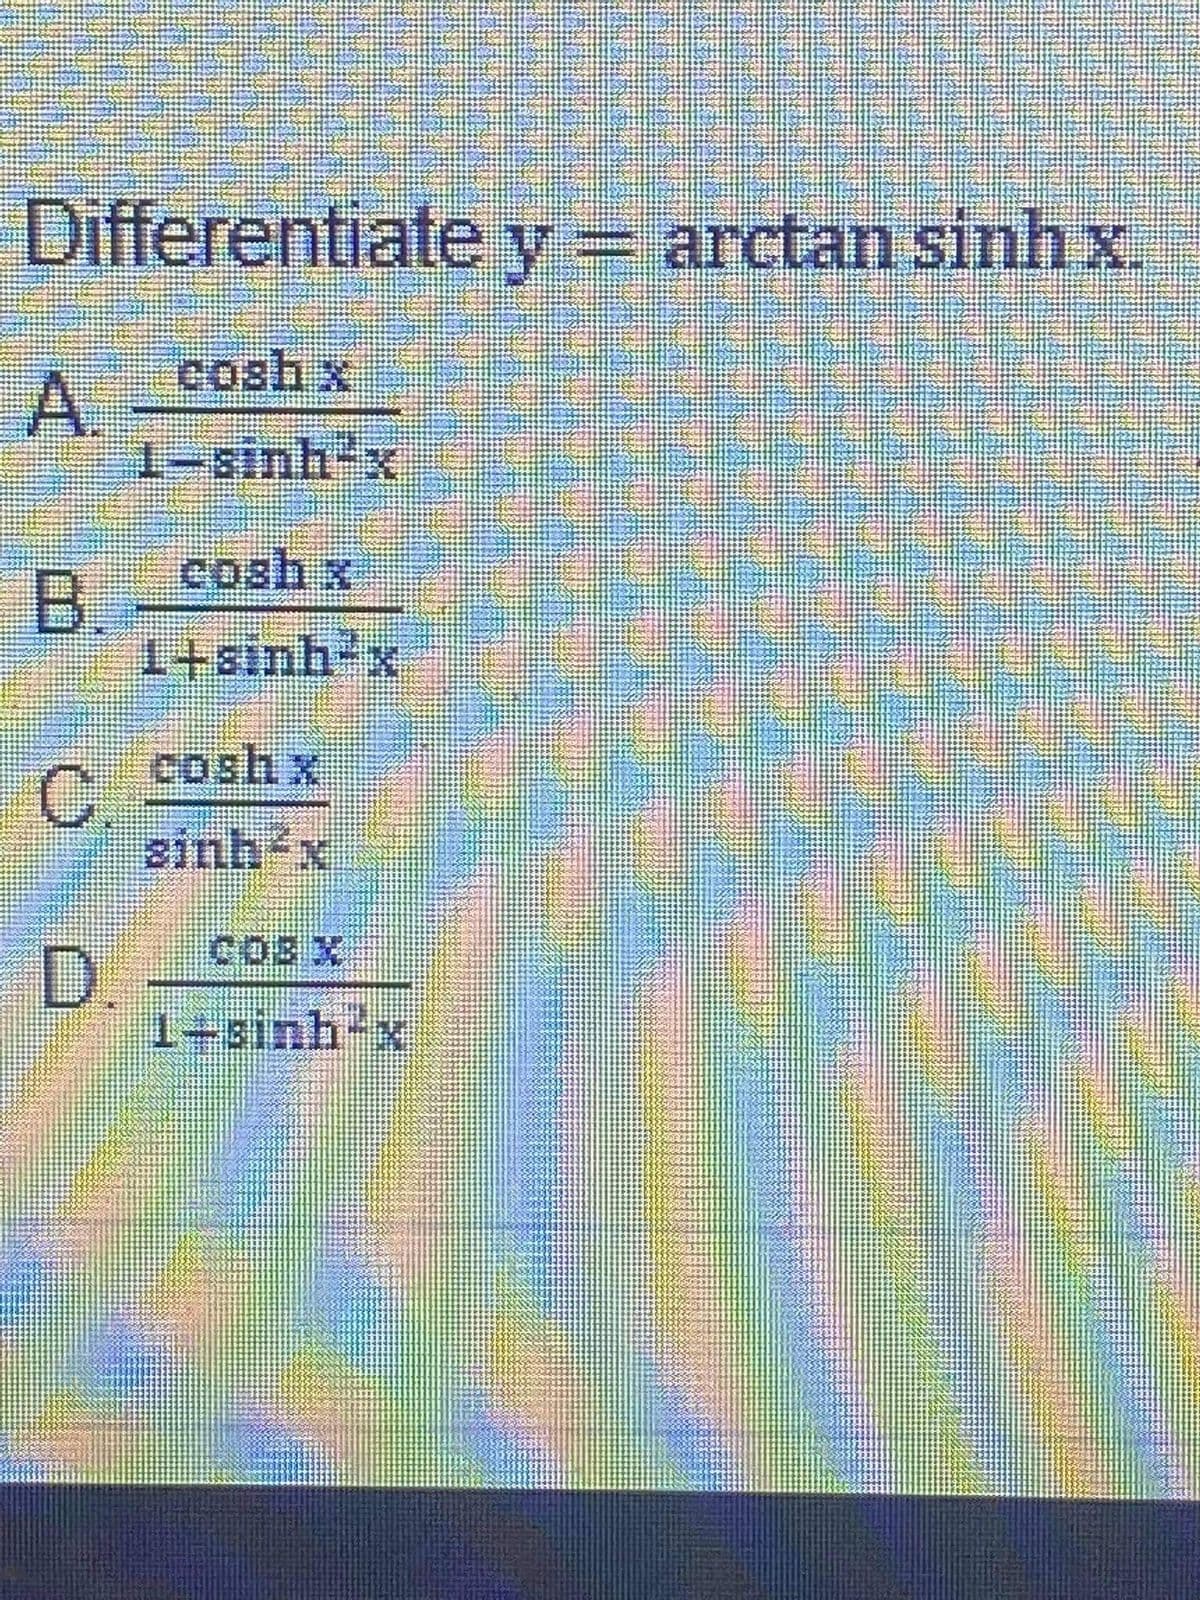 Differentiate y= .
arctan sinh x
coshx
A.
1-sinh-x
cosh x
B.
1+sinh-x
coshx
sinh-x
D.
1+sinh-x
